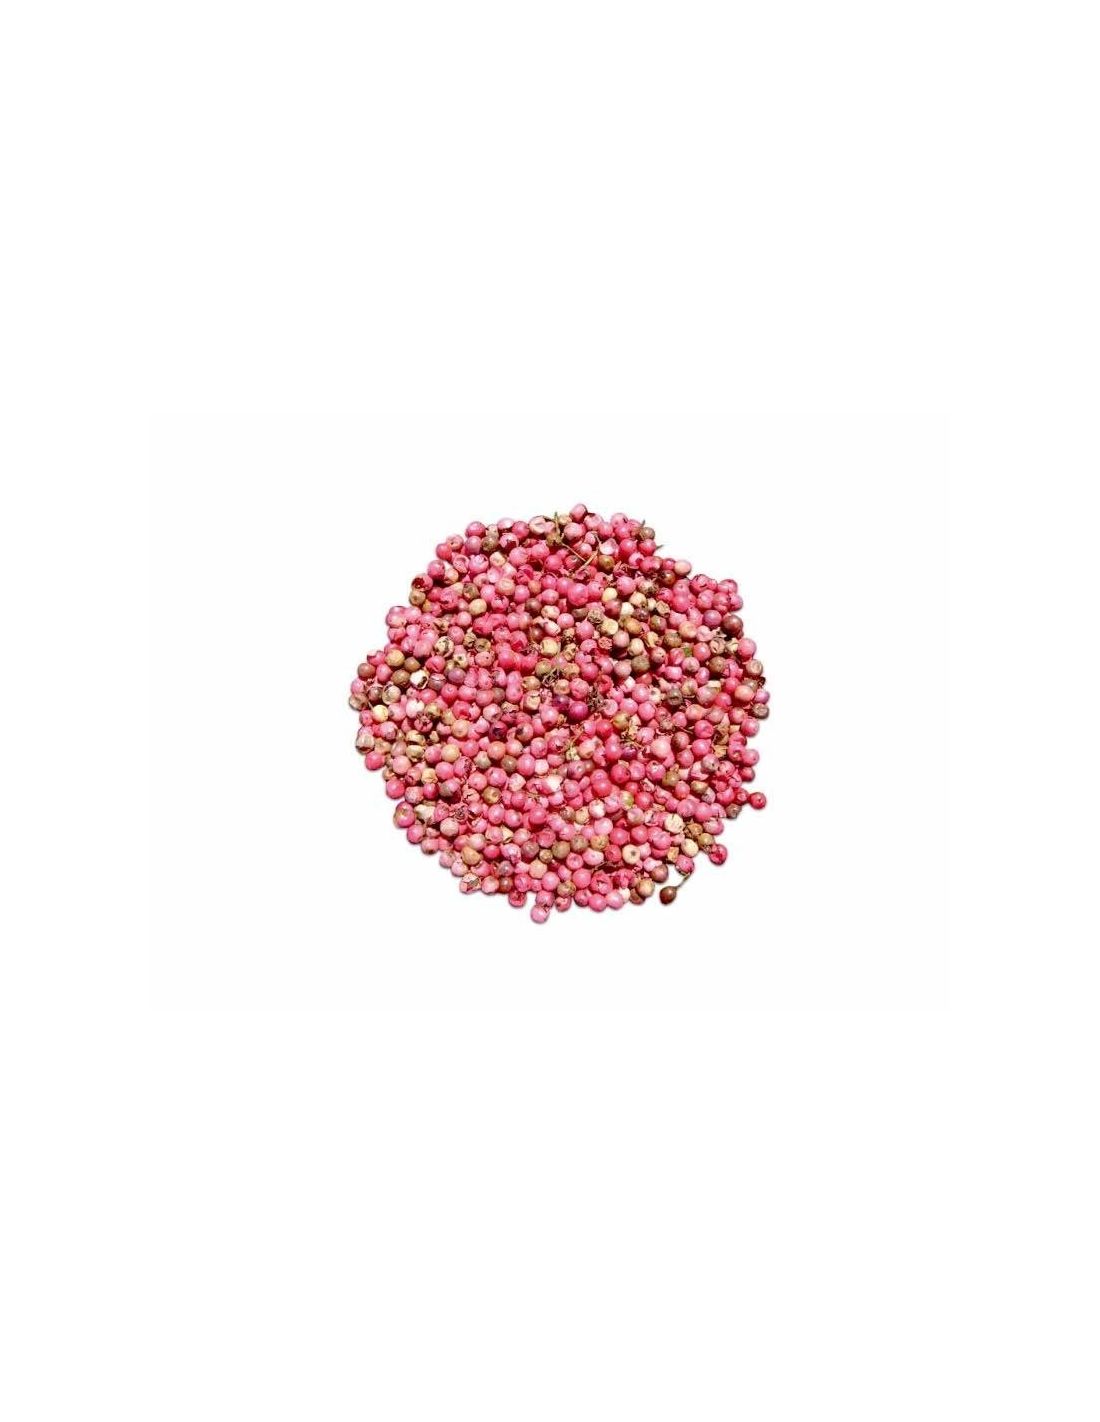 Pepe rosa grani disidratato 500 gr